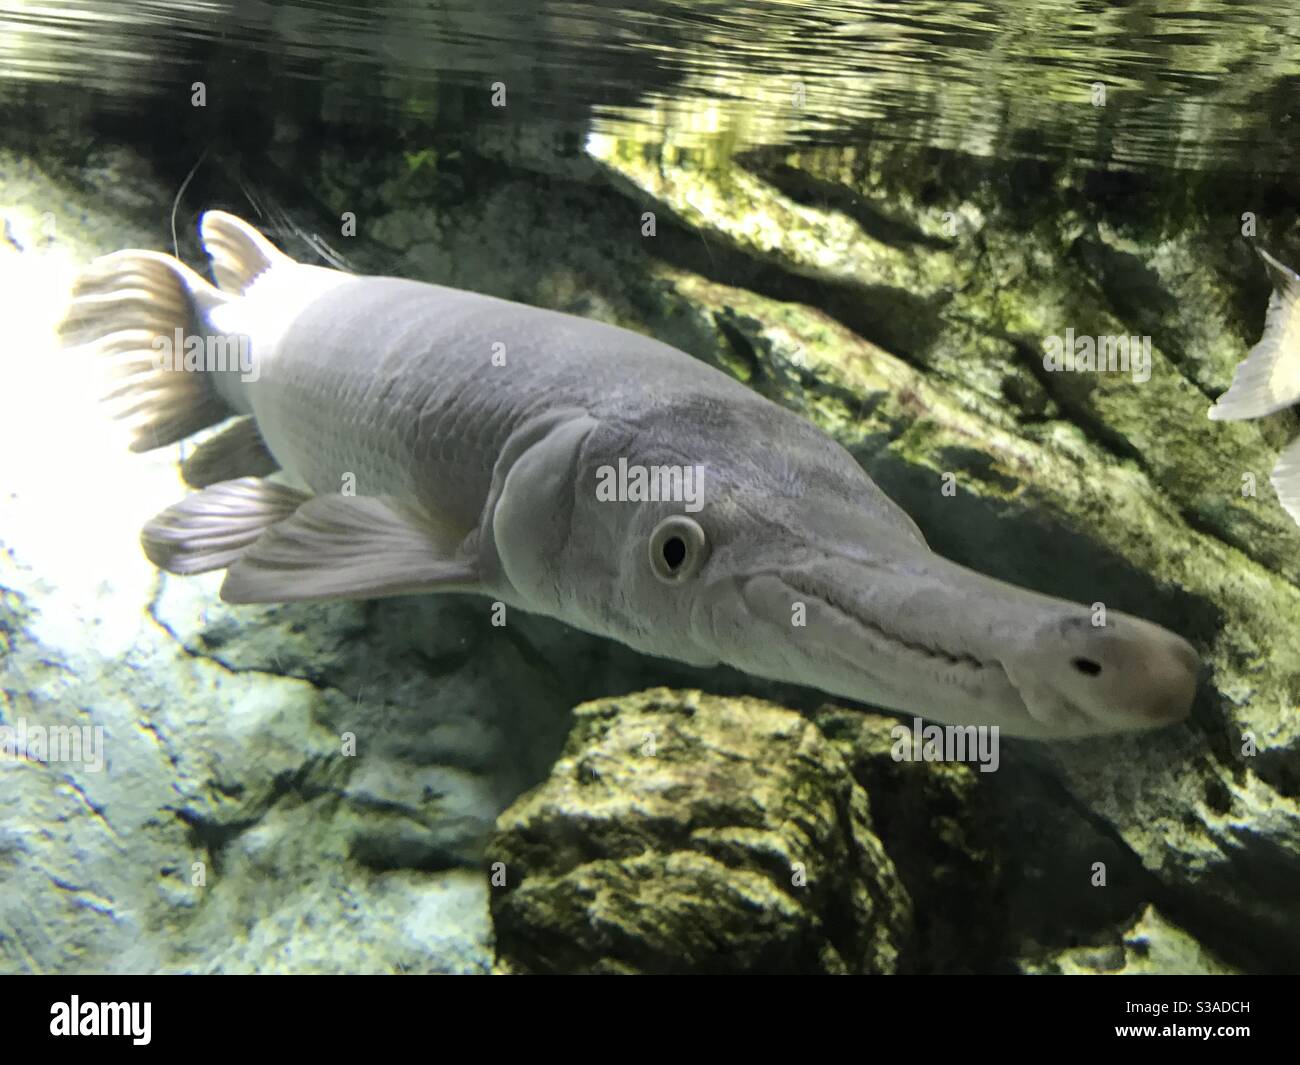 Long nosed fish underwater Stock Photo